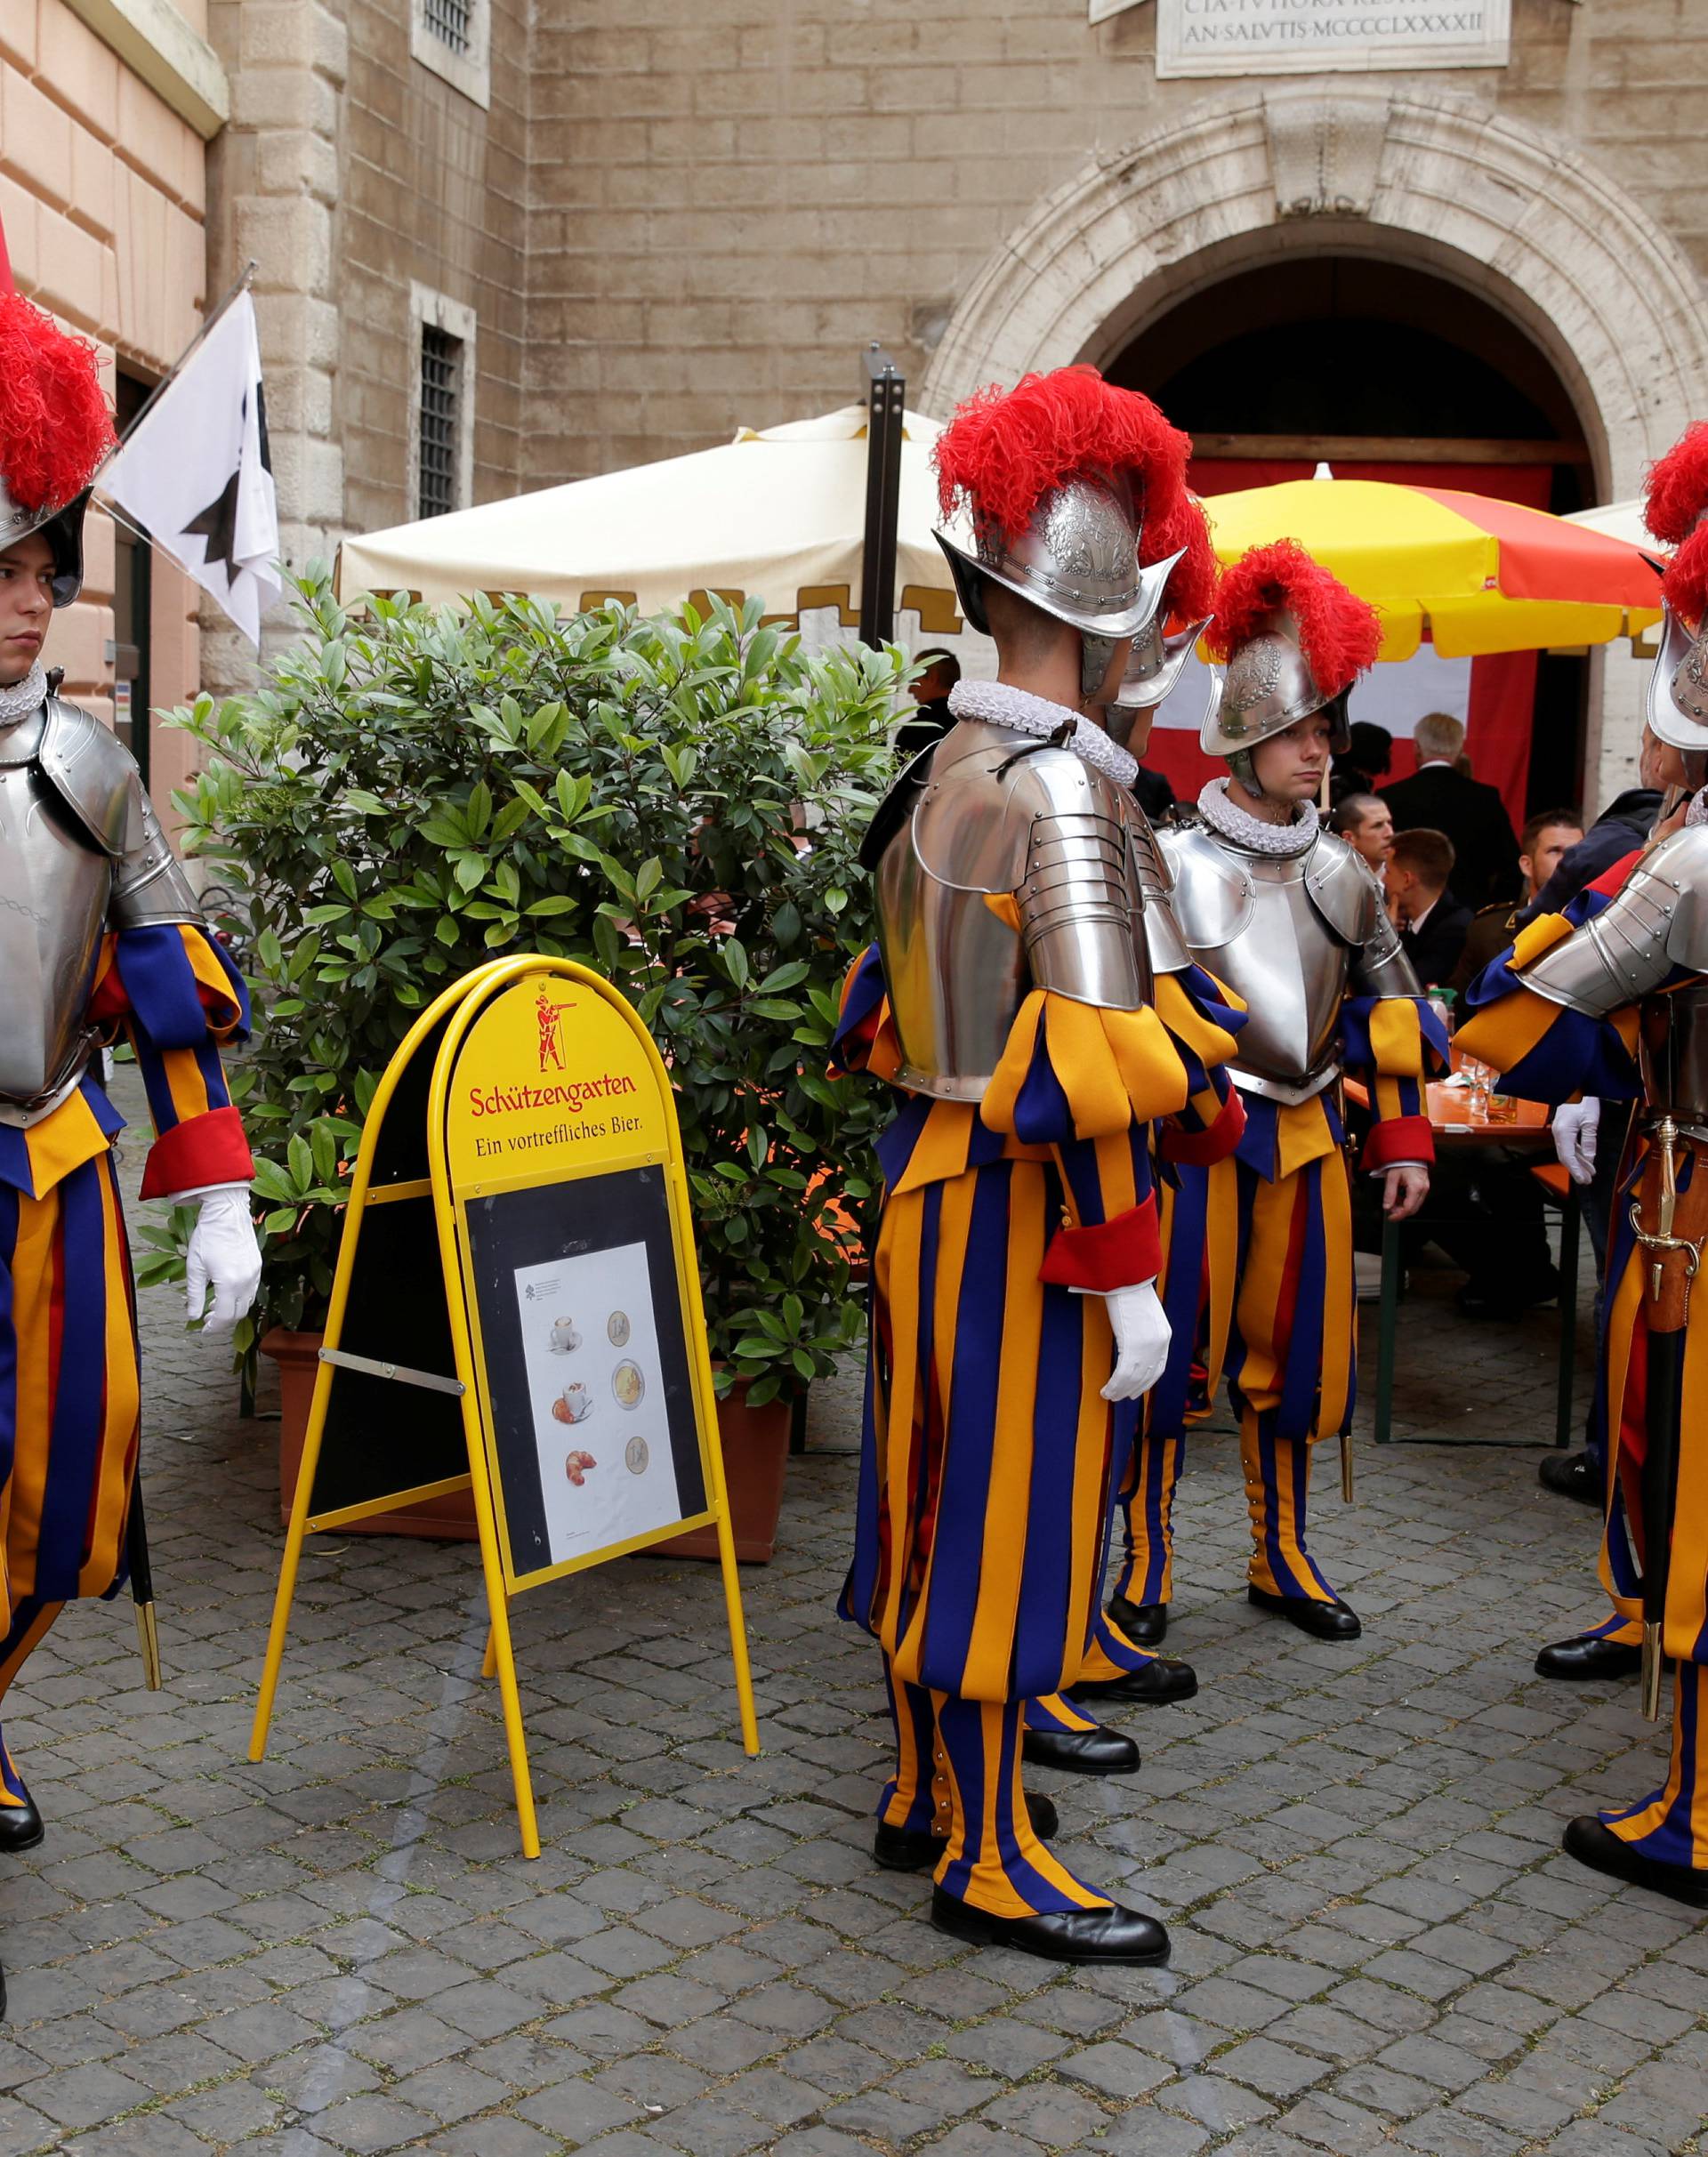 New recruits of the Vaticanâs elite Swiss Guard prepare for the swearing-in ceremony at the Vatican